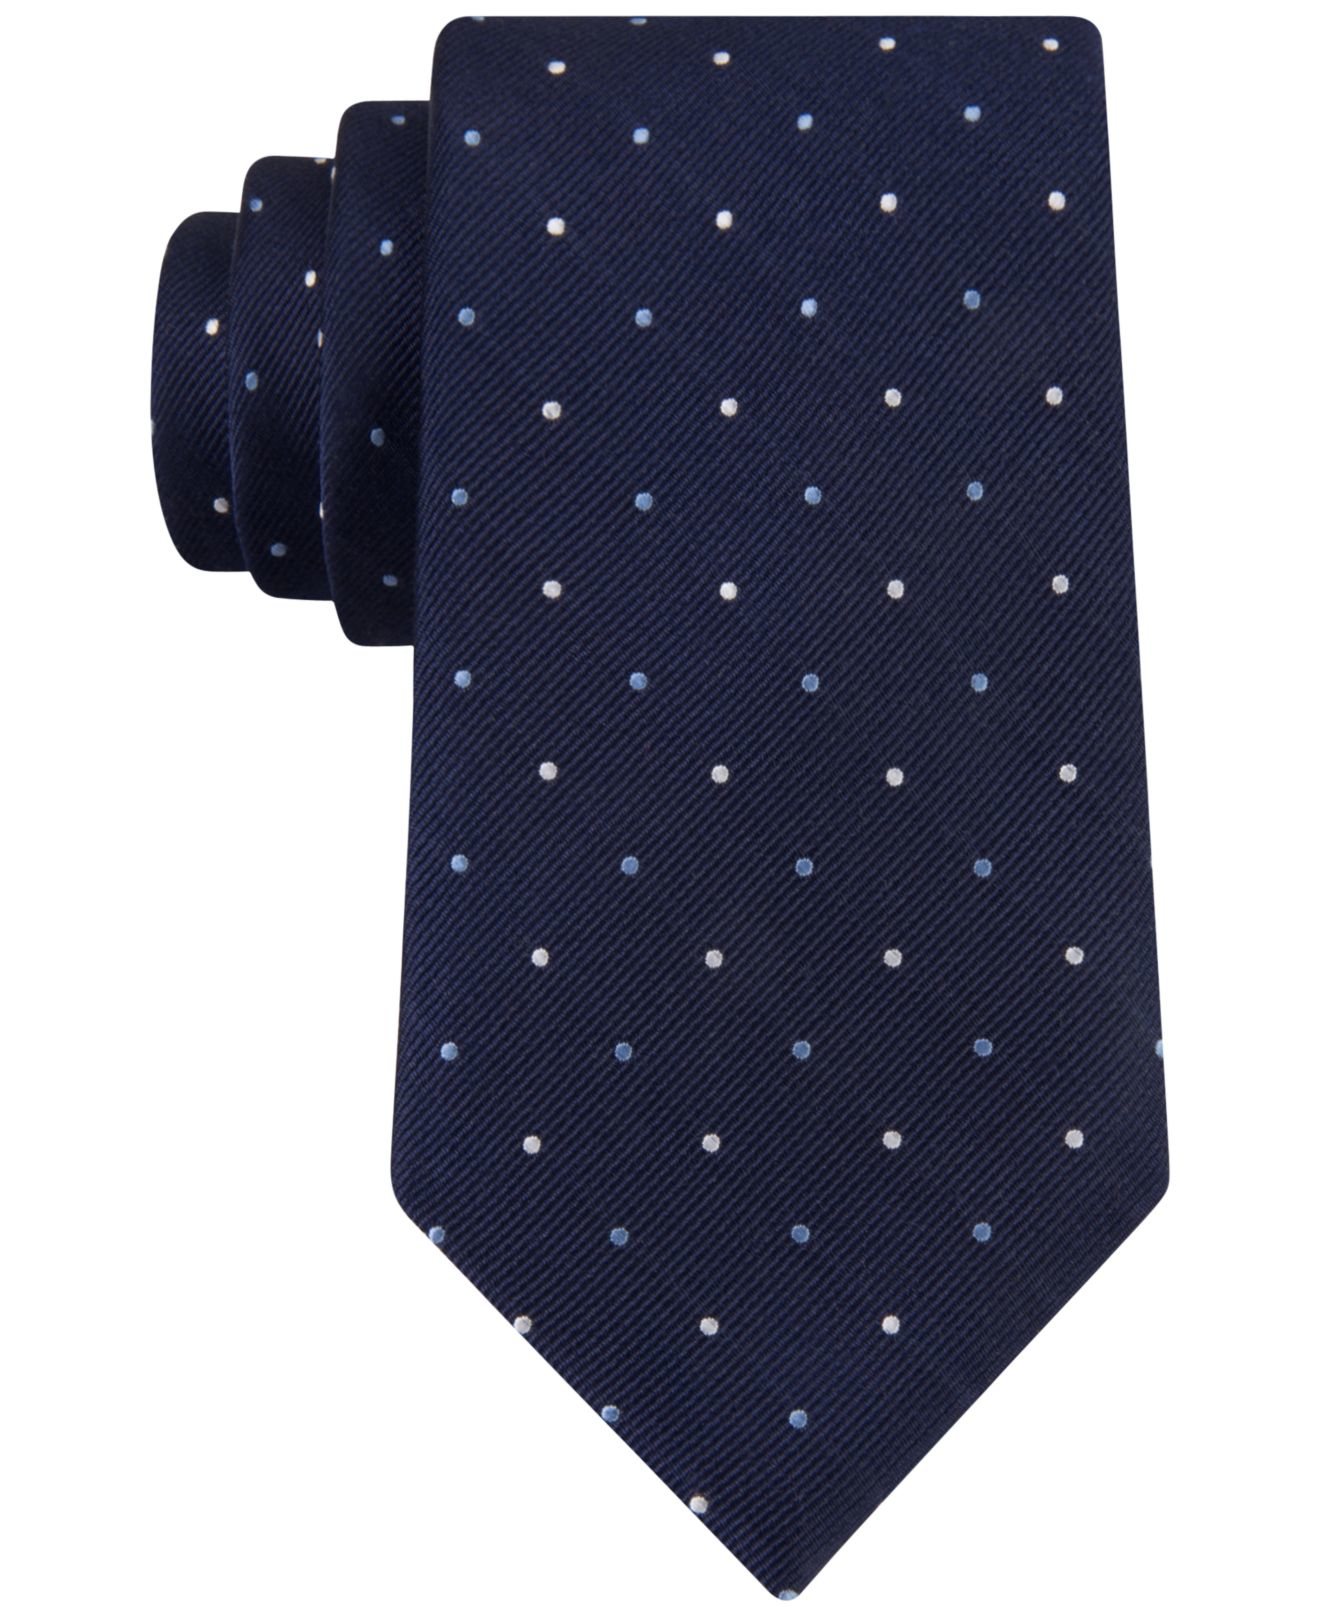 Lyst - Tommy Hilfiger Multi-dot Tie in Blue for Men